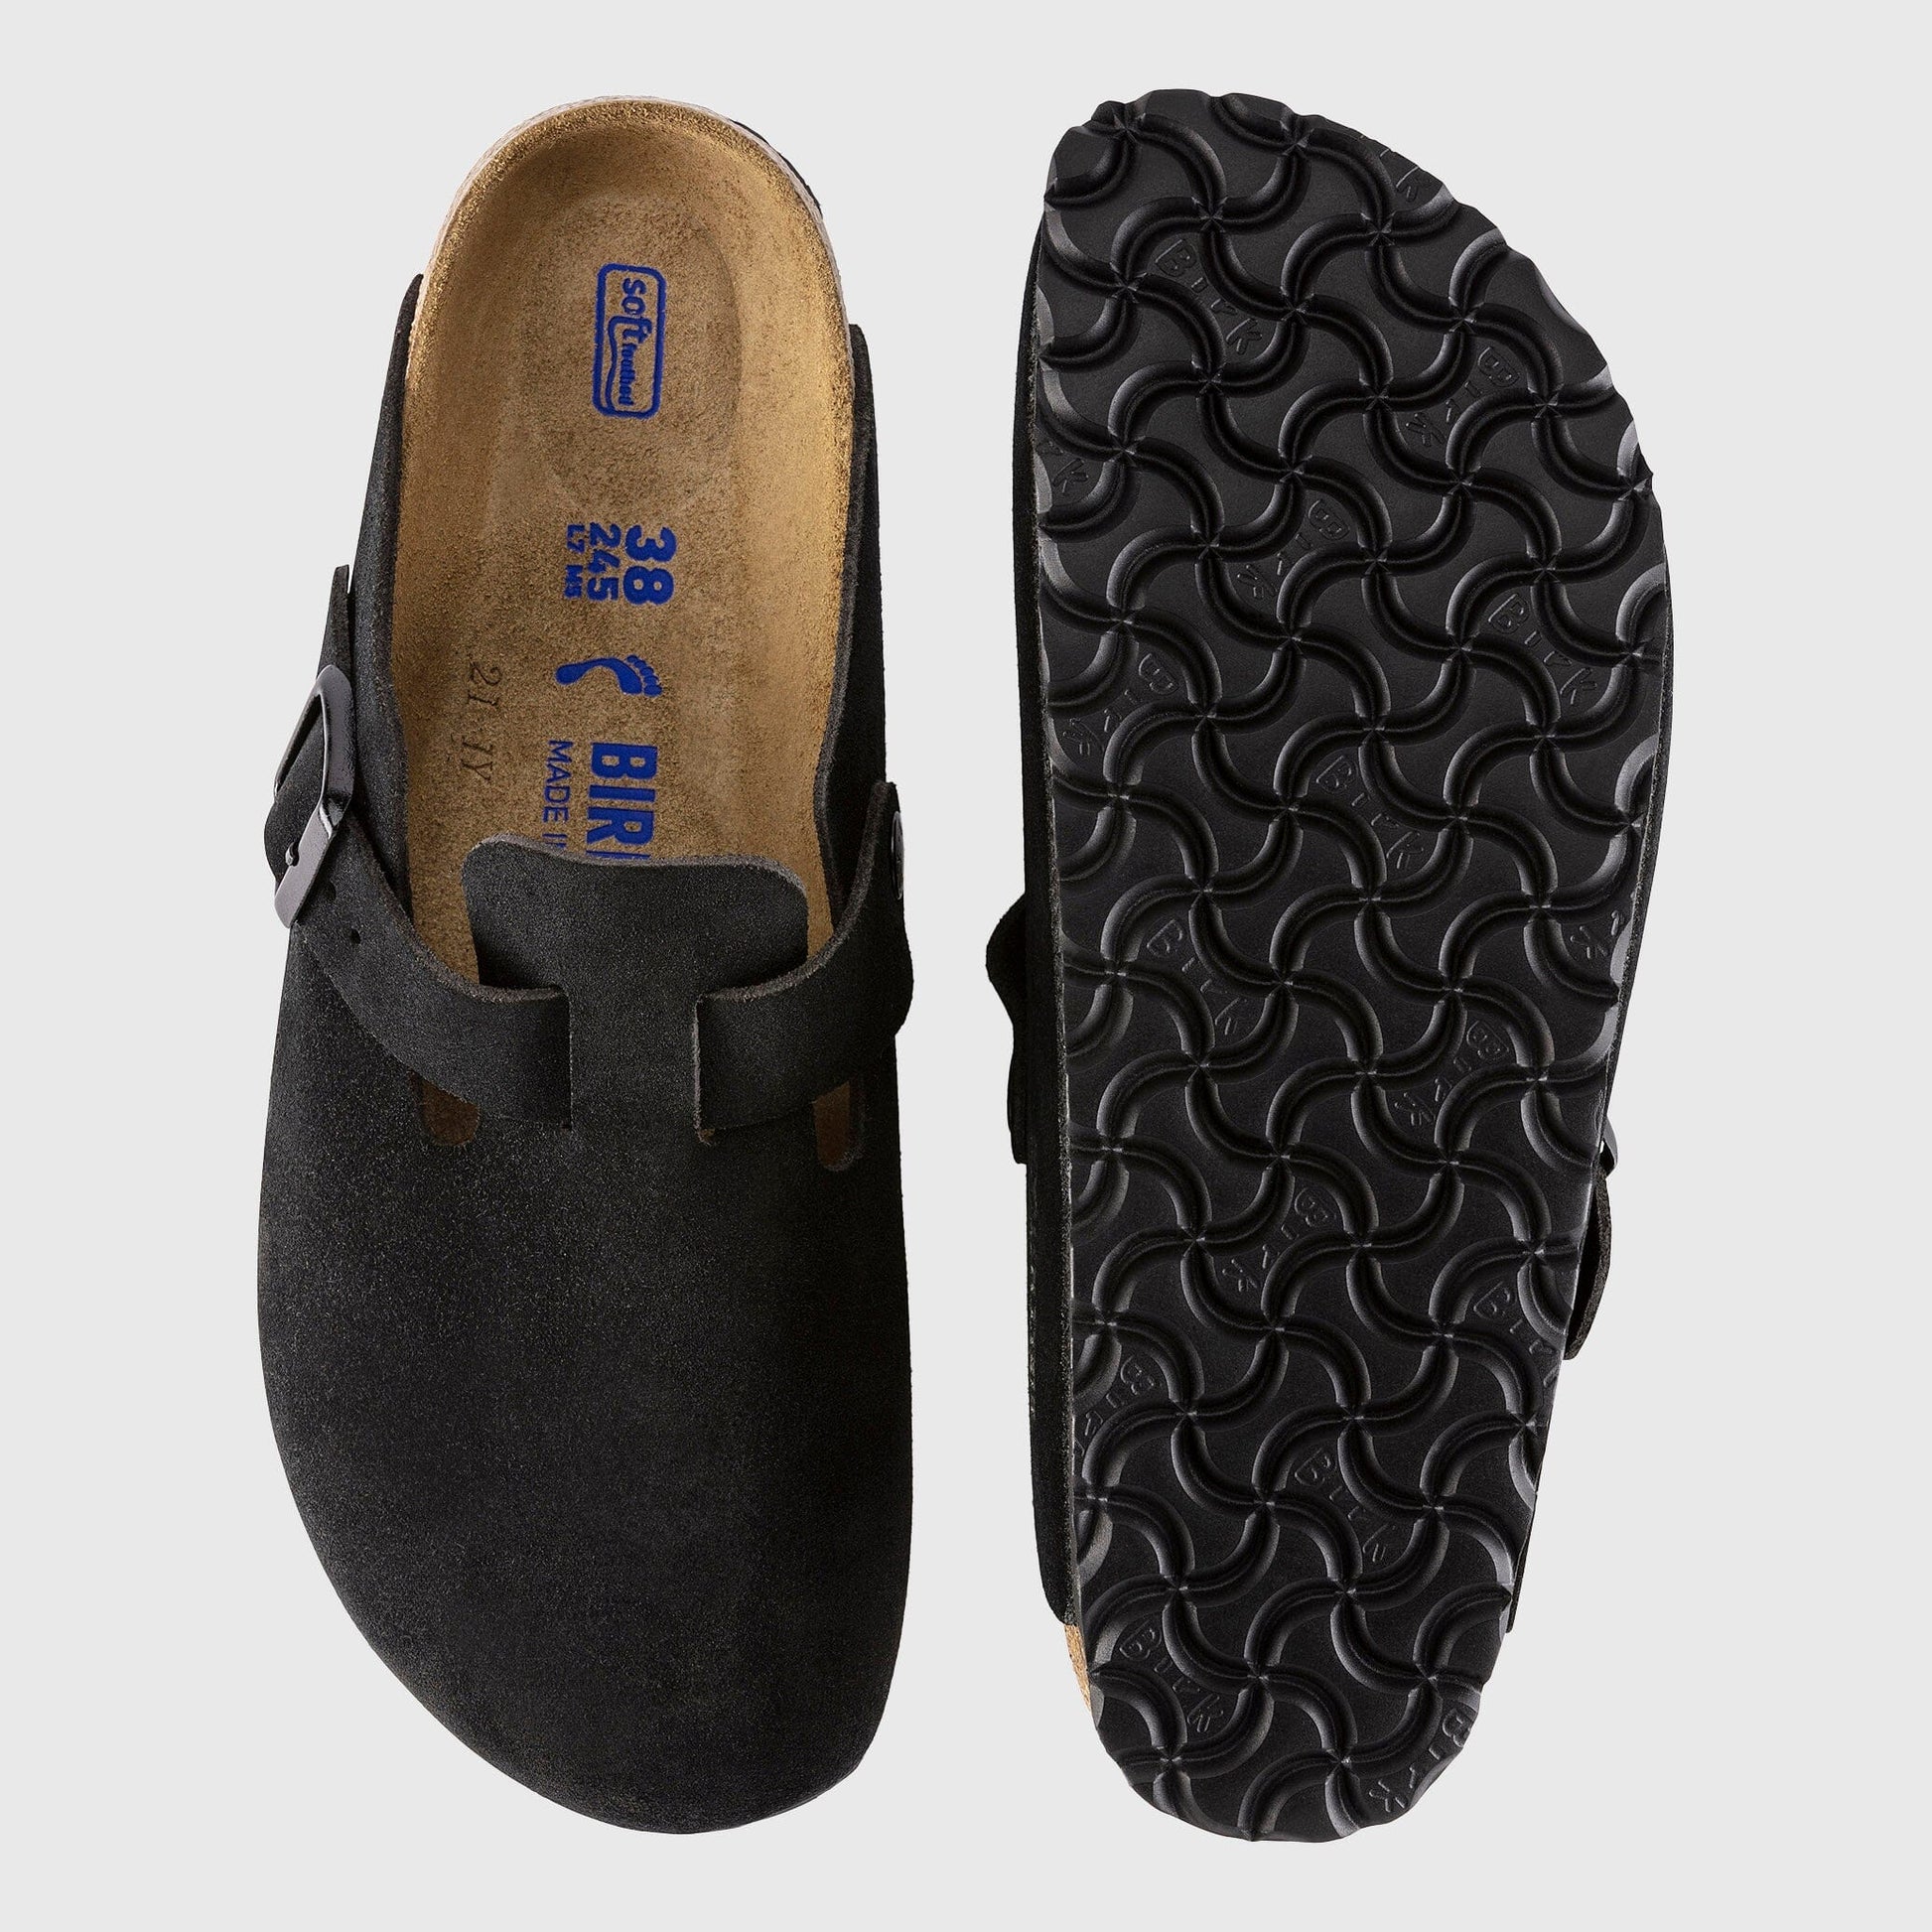 Birkenstock Boston Clog Suede - Black Shoes Birkenstock 